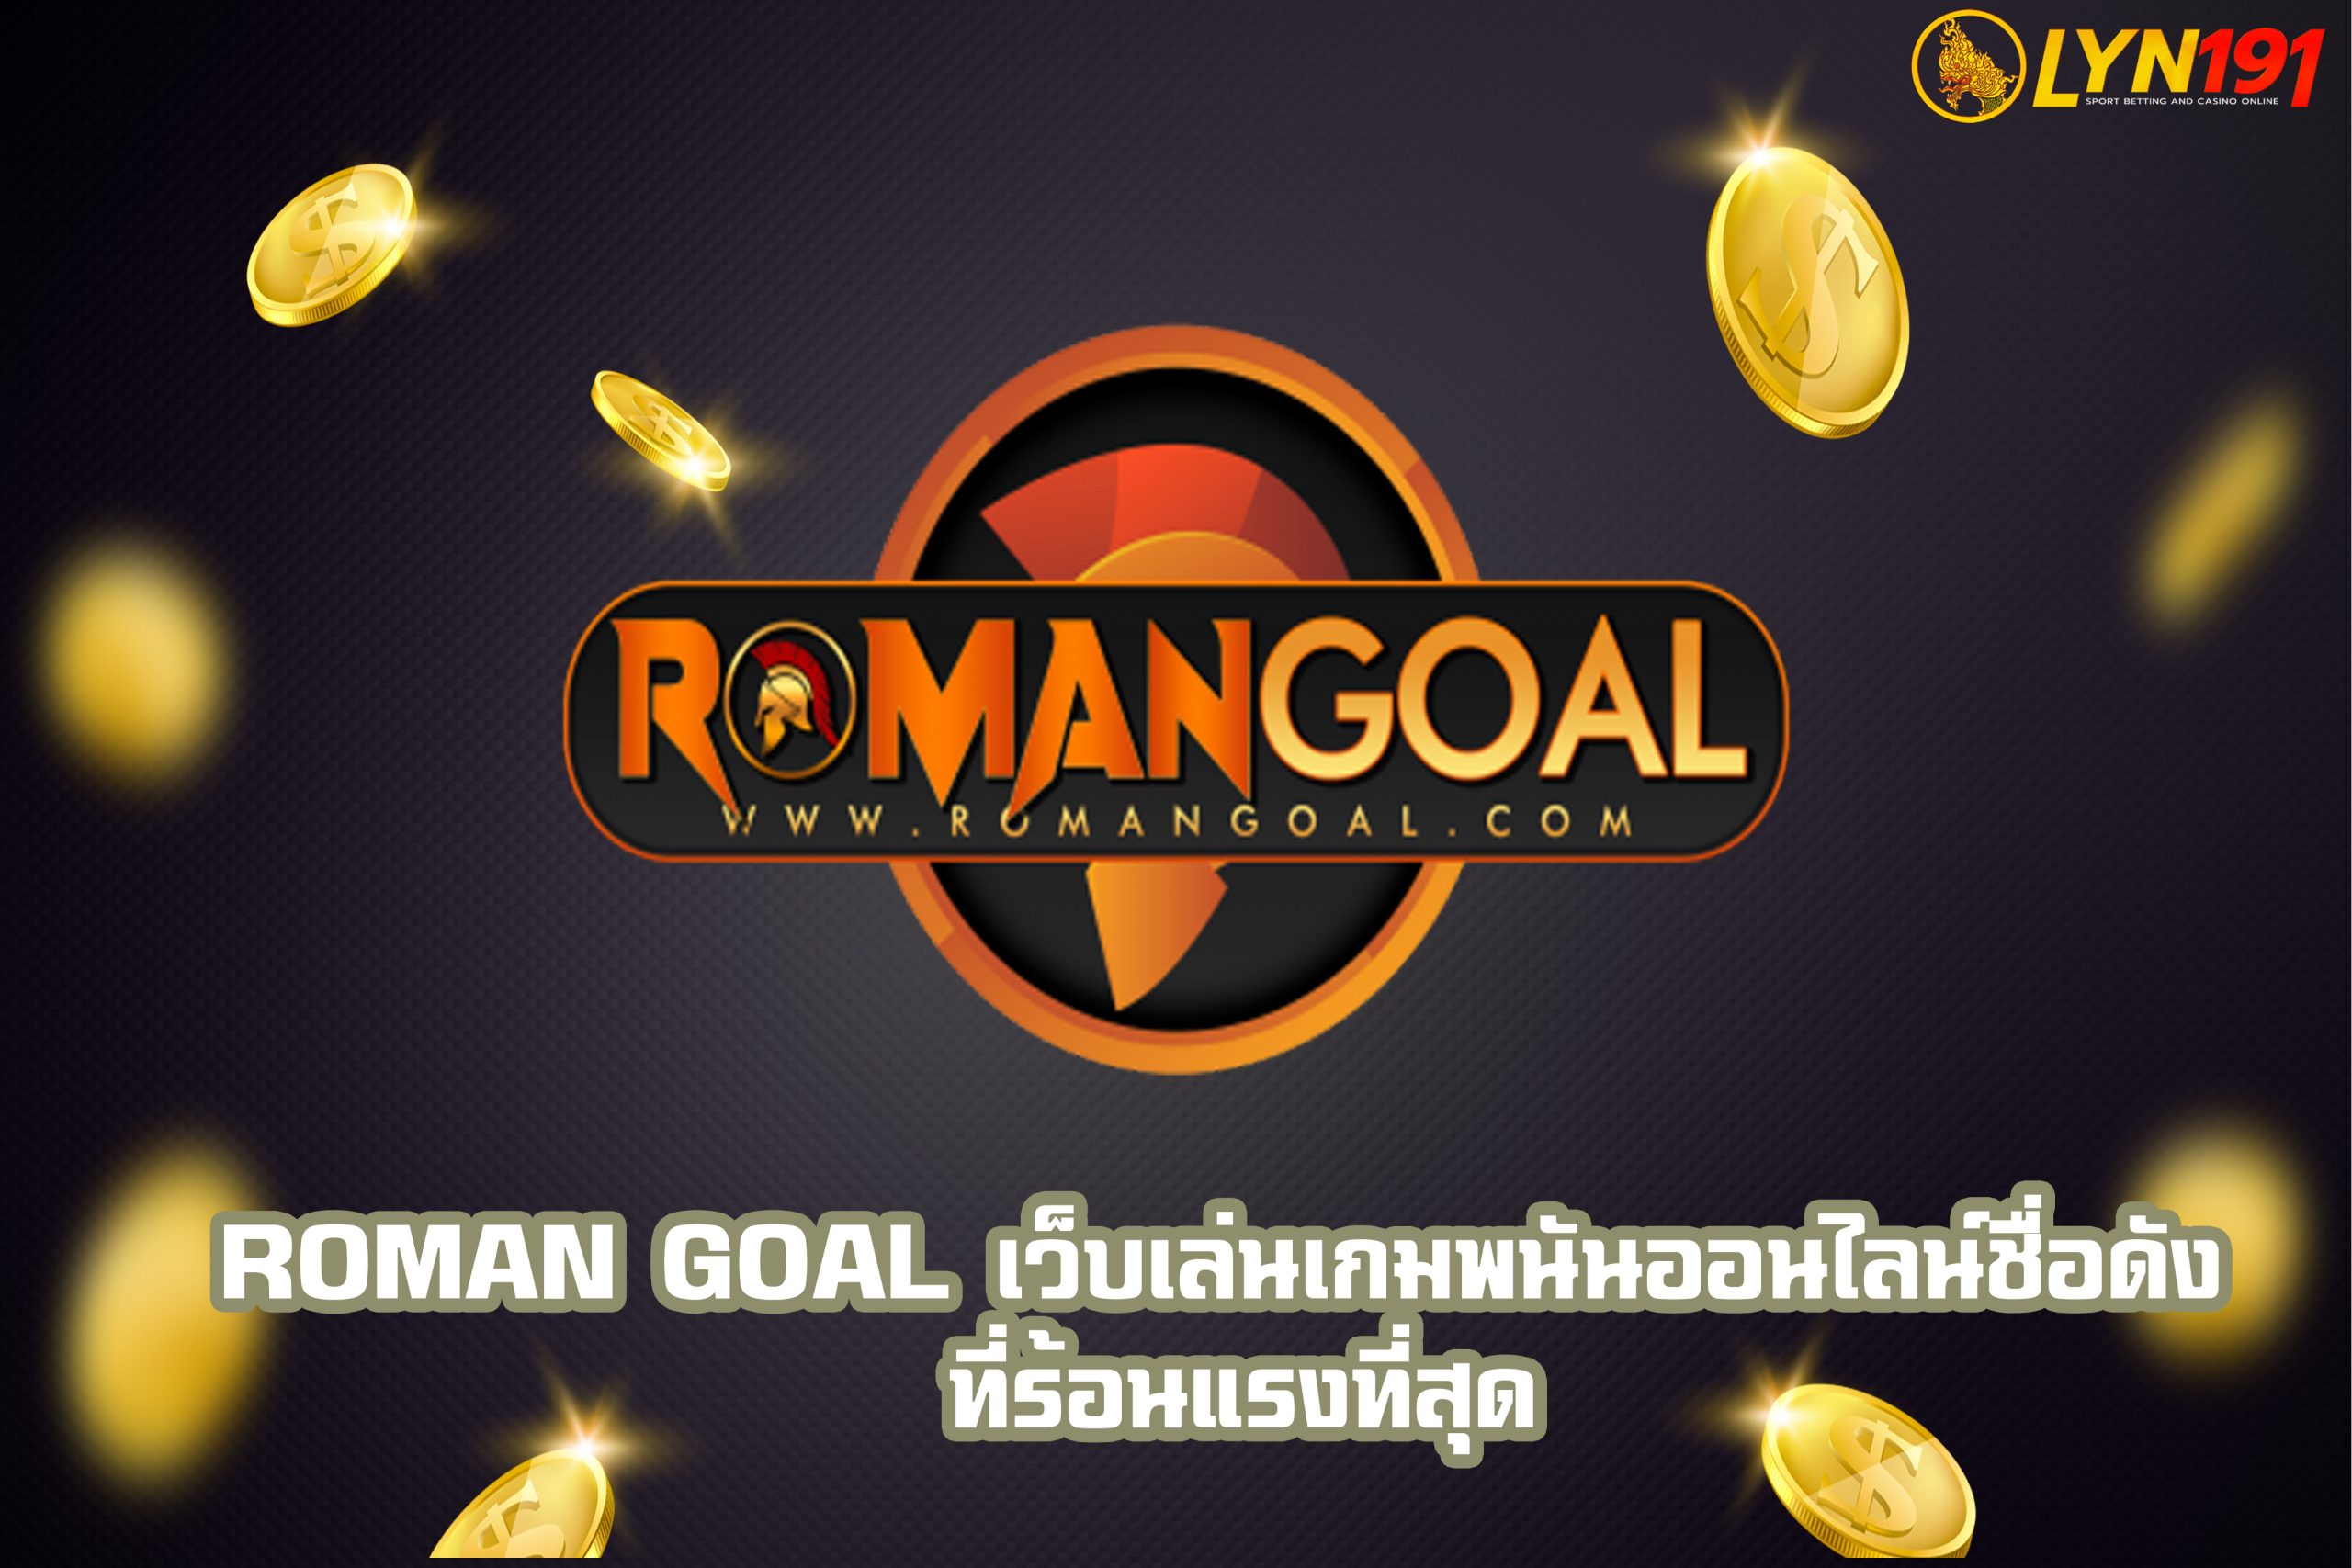 roman goal เว็บเล่นเกมพนันออนไลน์ชื่อดัง ที่ร้อนแรงที่สุด